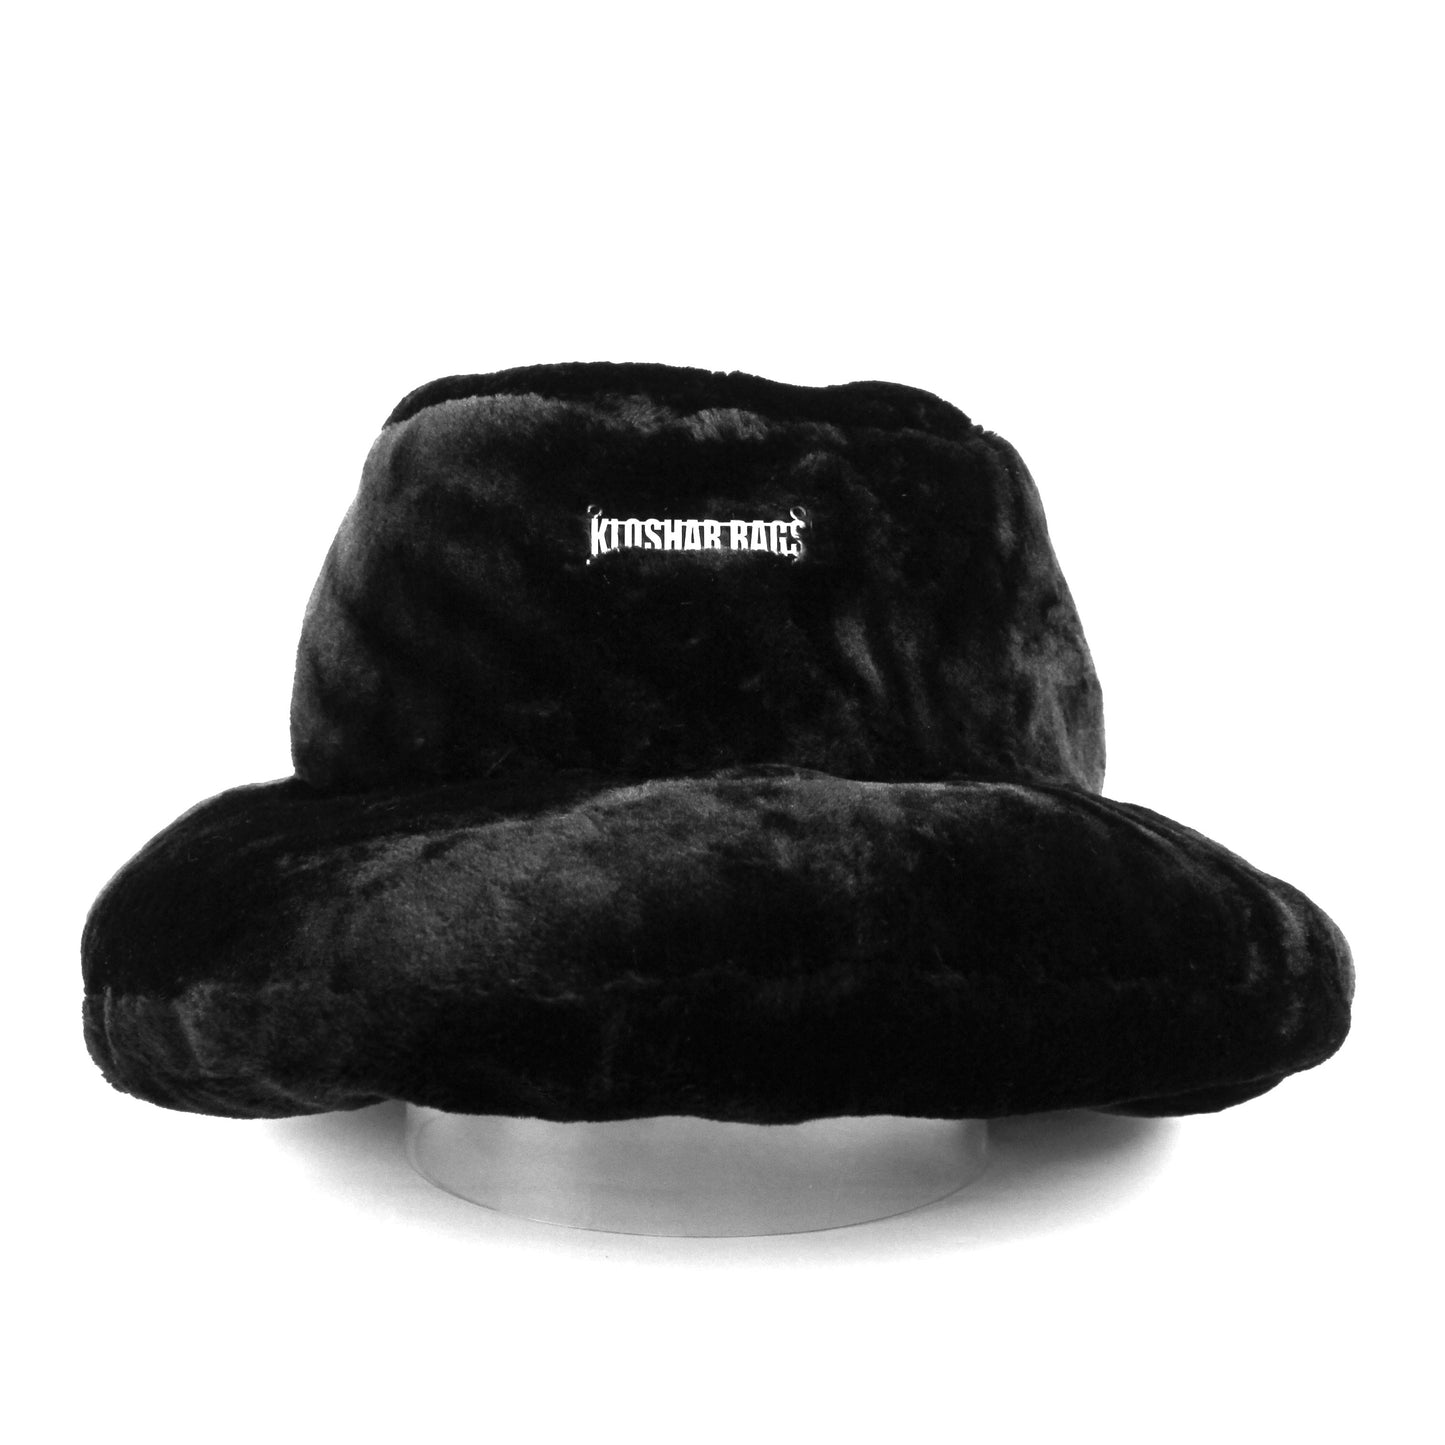 "BLACK" large bucket hat